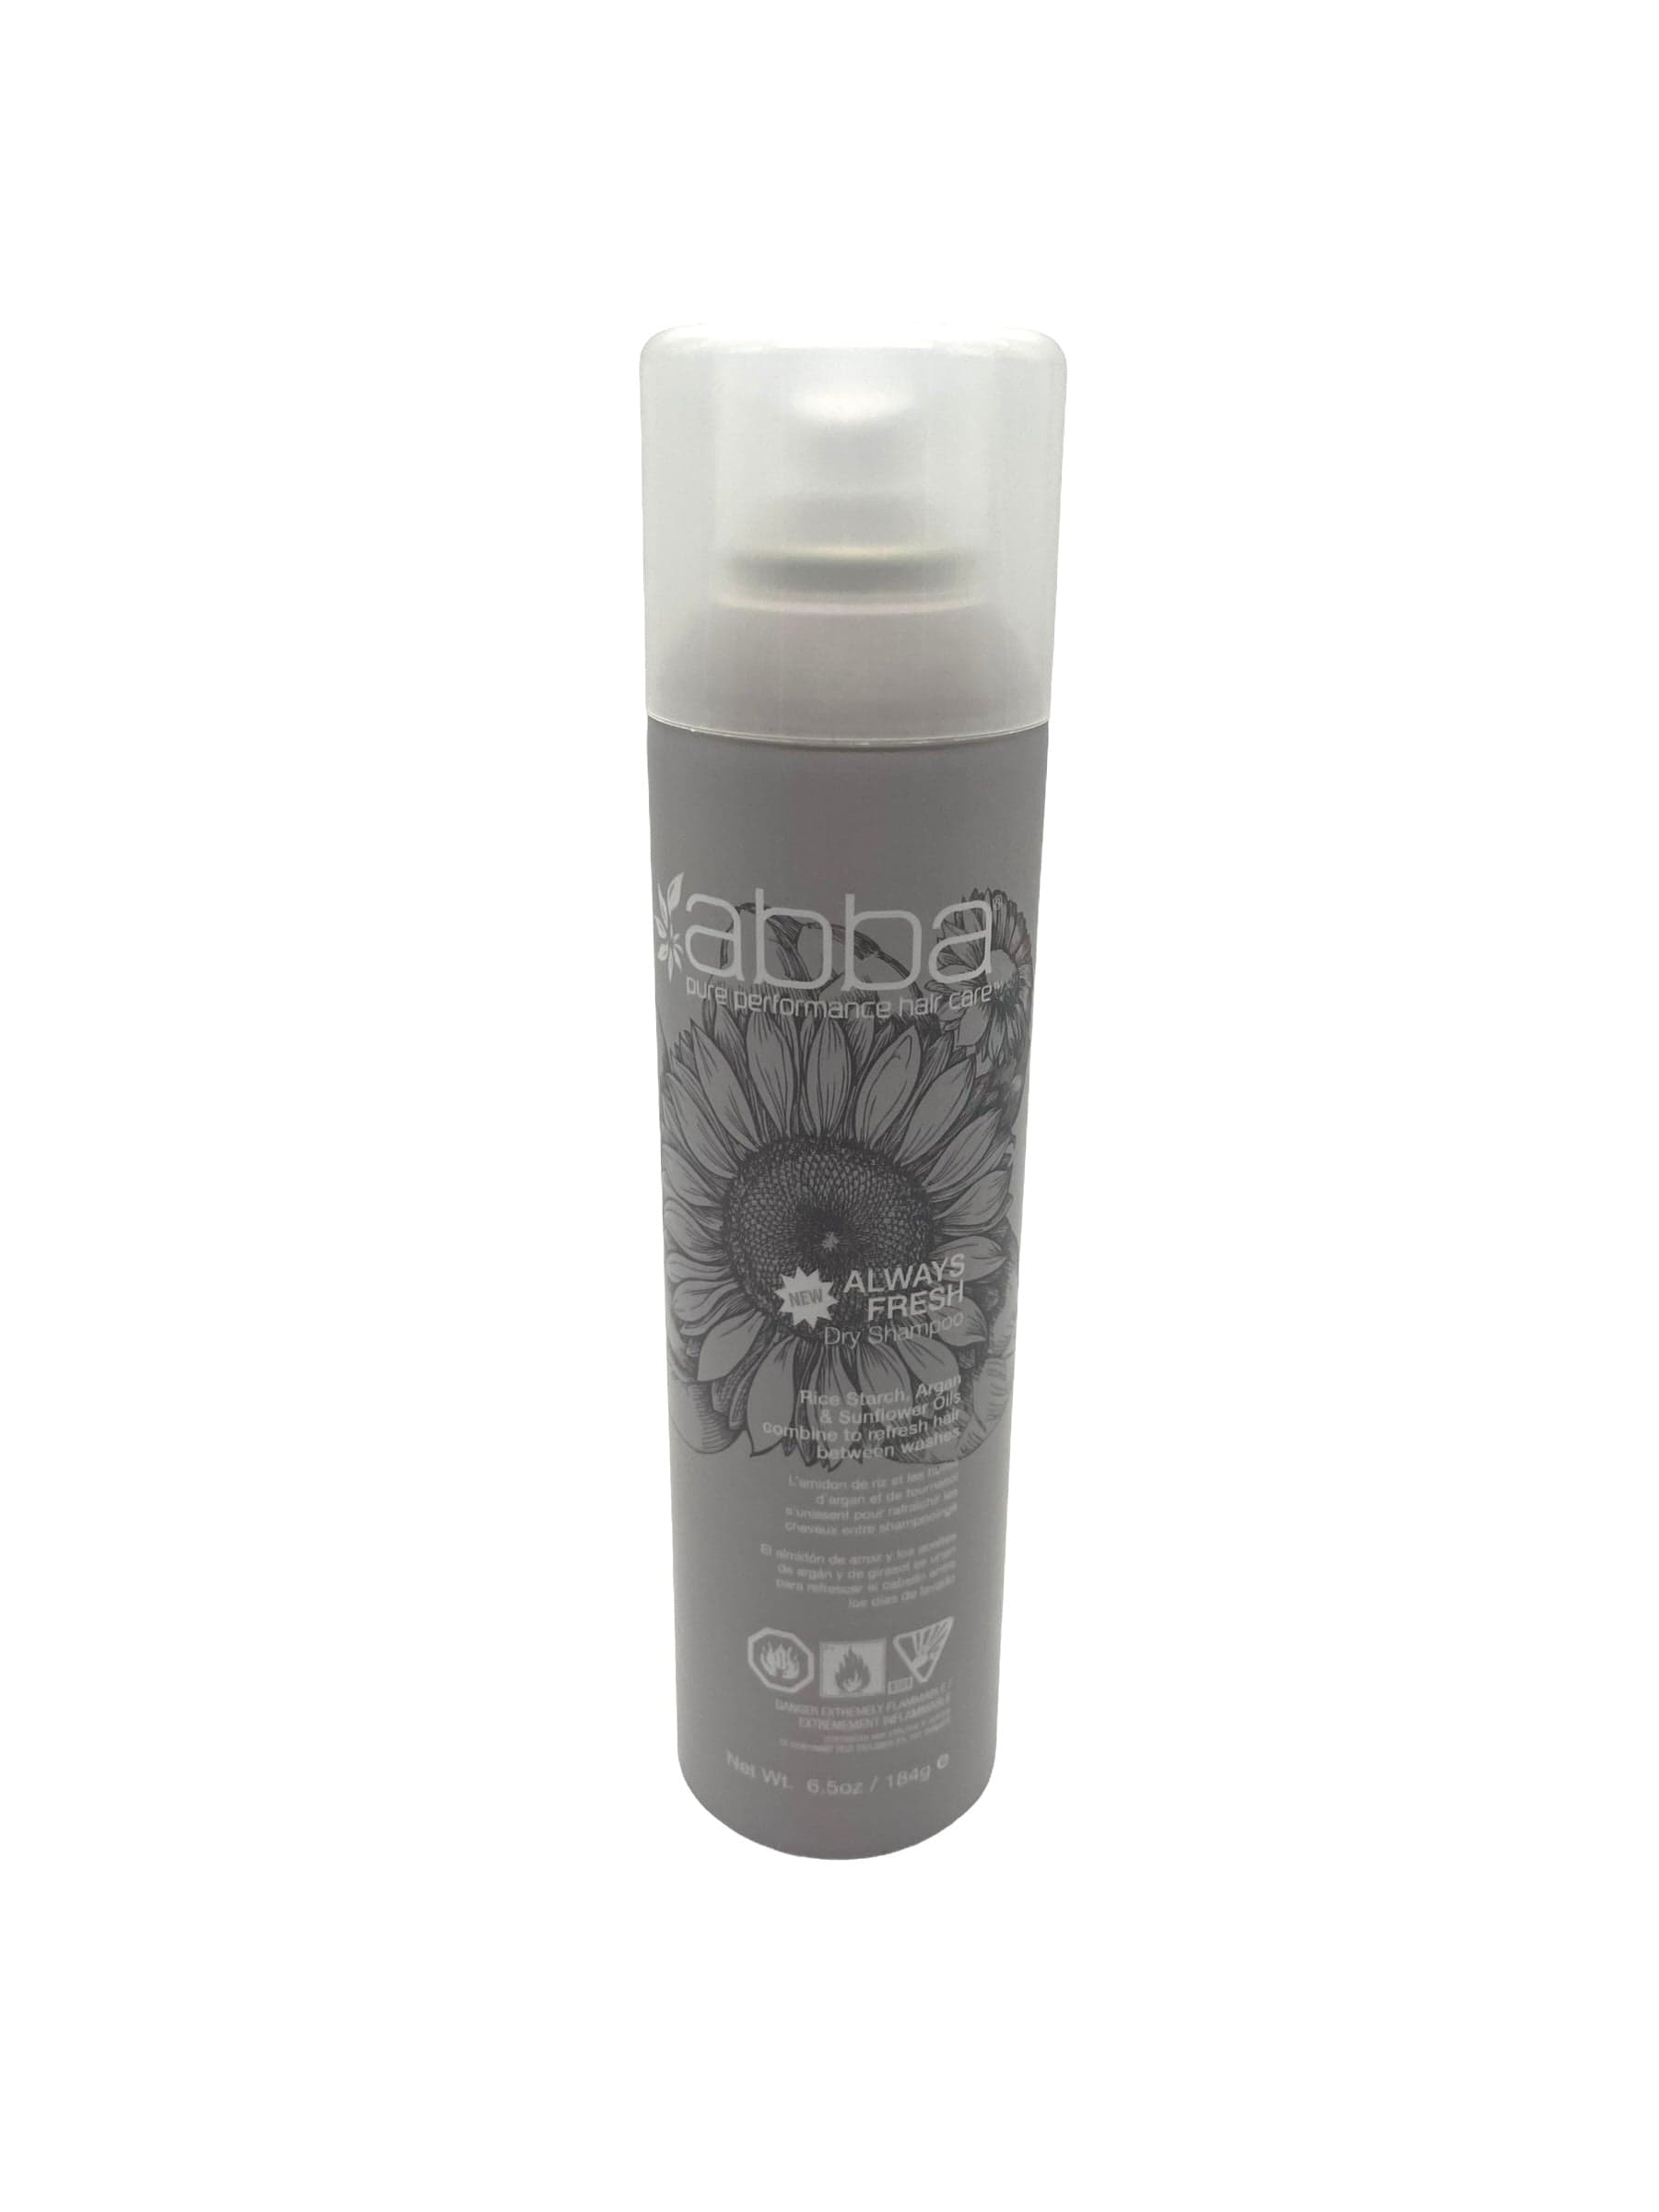 Abba Dry Shampoo 100% Vegan & Gluten Free 6.5oz Dry Shampoo